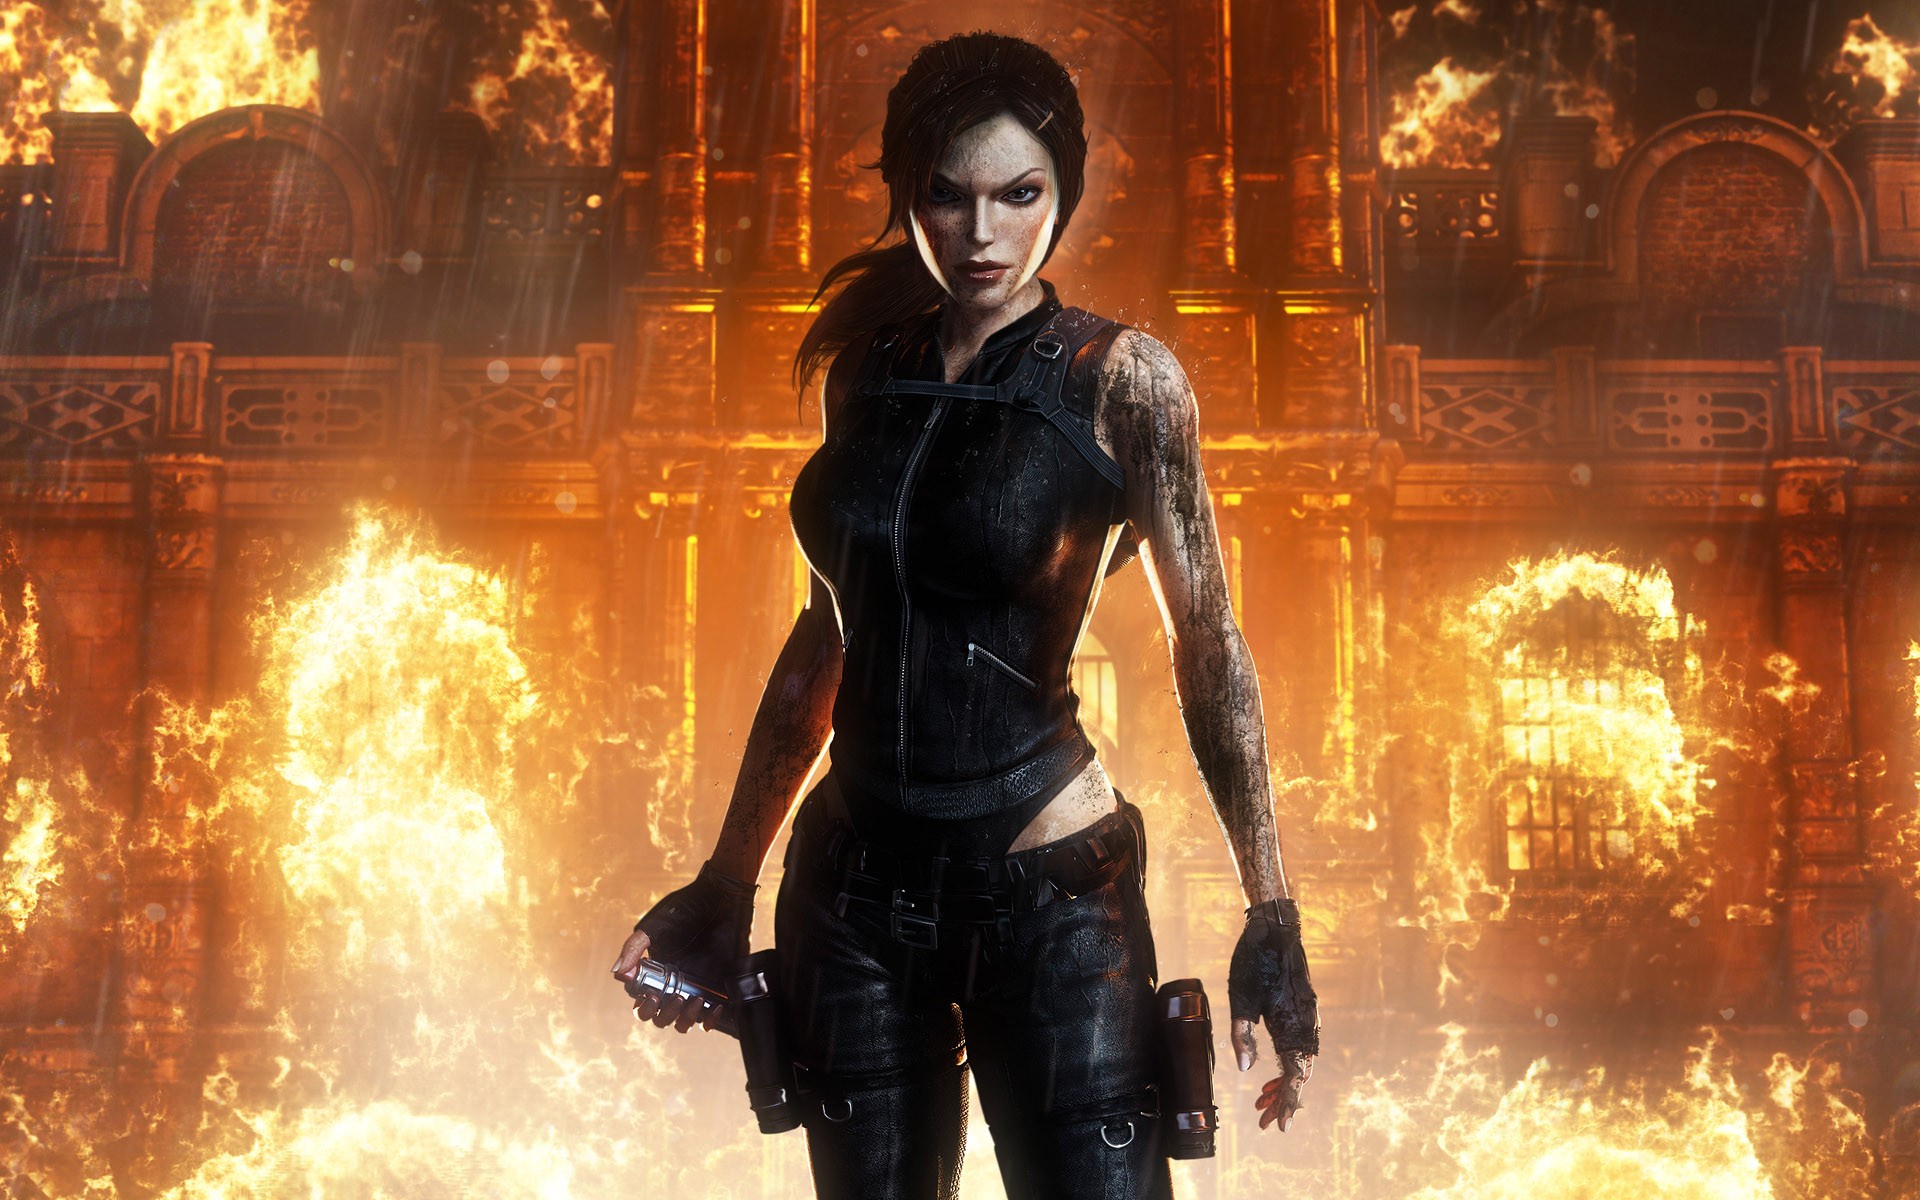 видеоигры, Tomb Raider, Лара Крофт - обои на рабочий стол